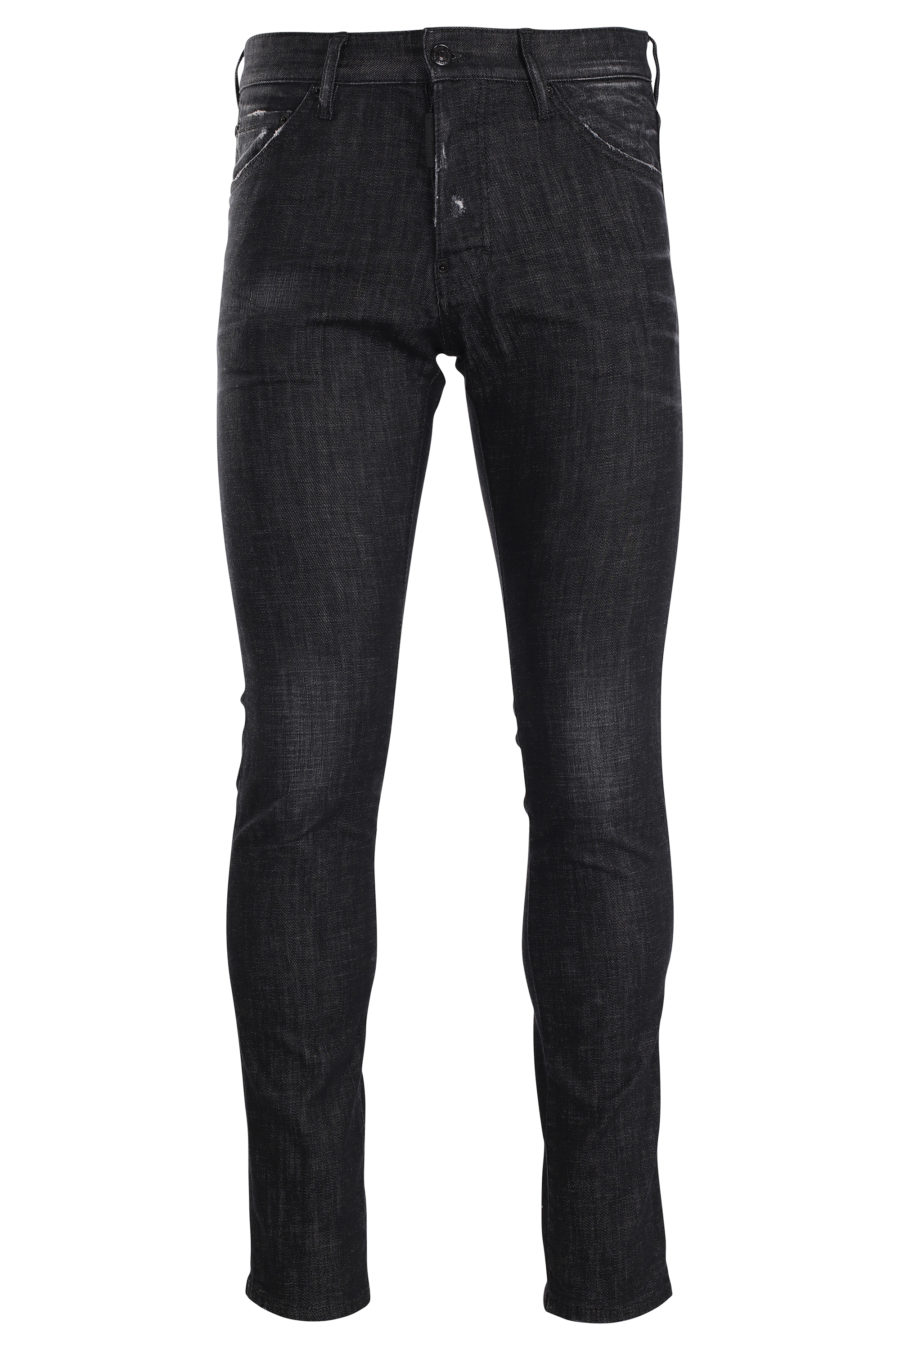 Jeans "ibra cool guy" black - IMG 9979